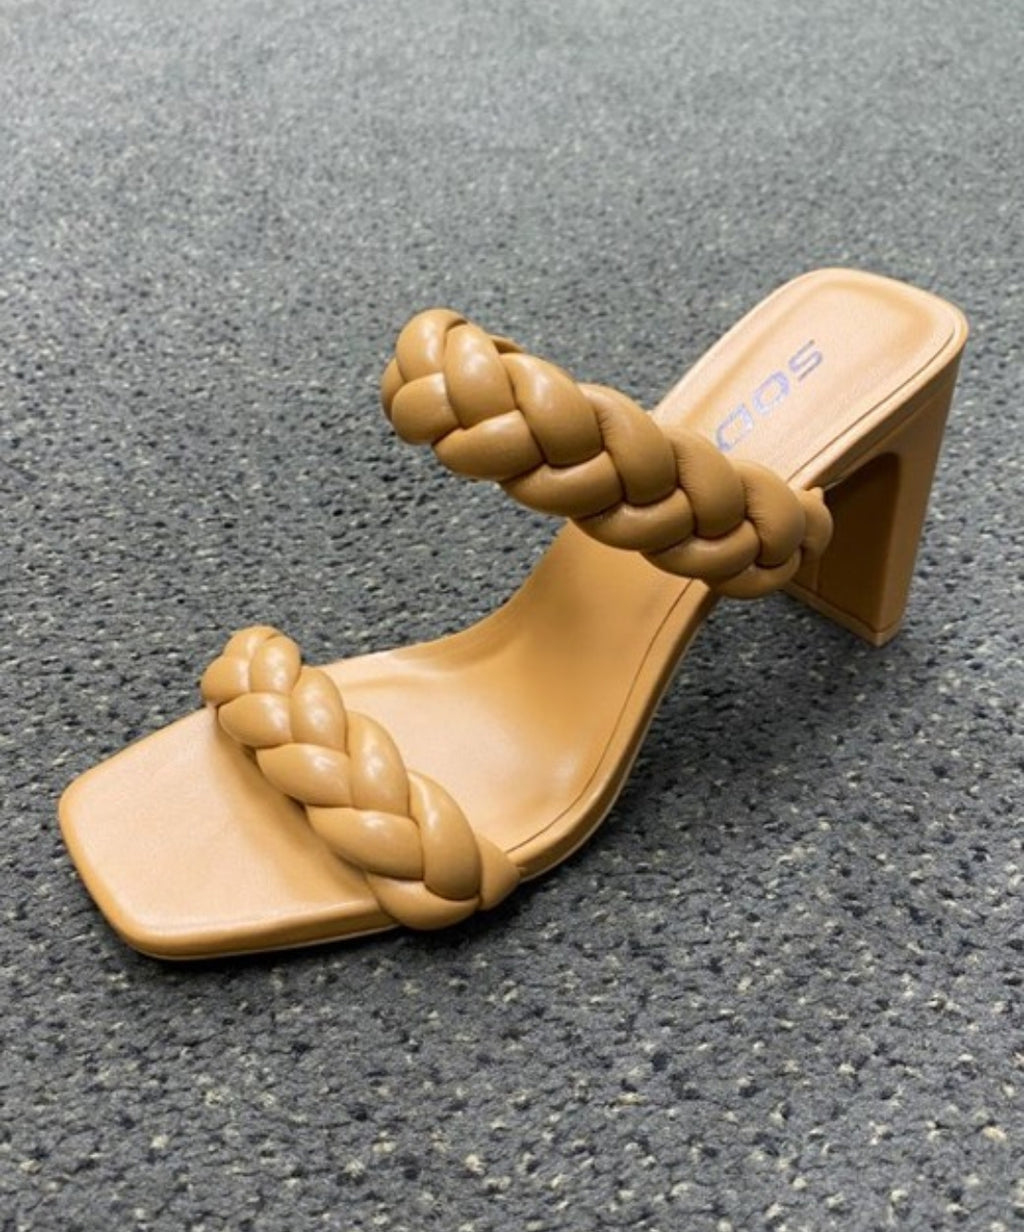 Classy Braid Sandals